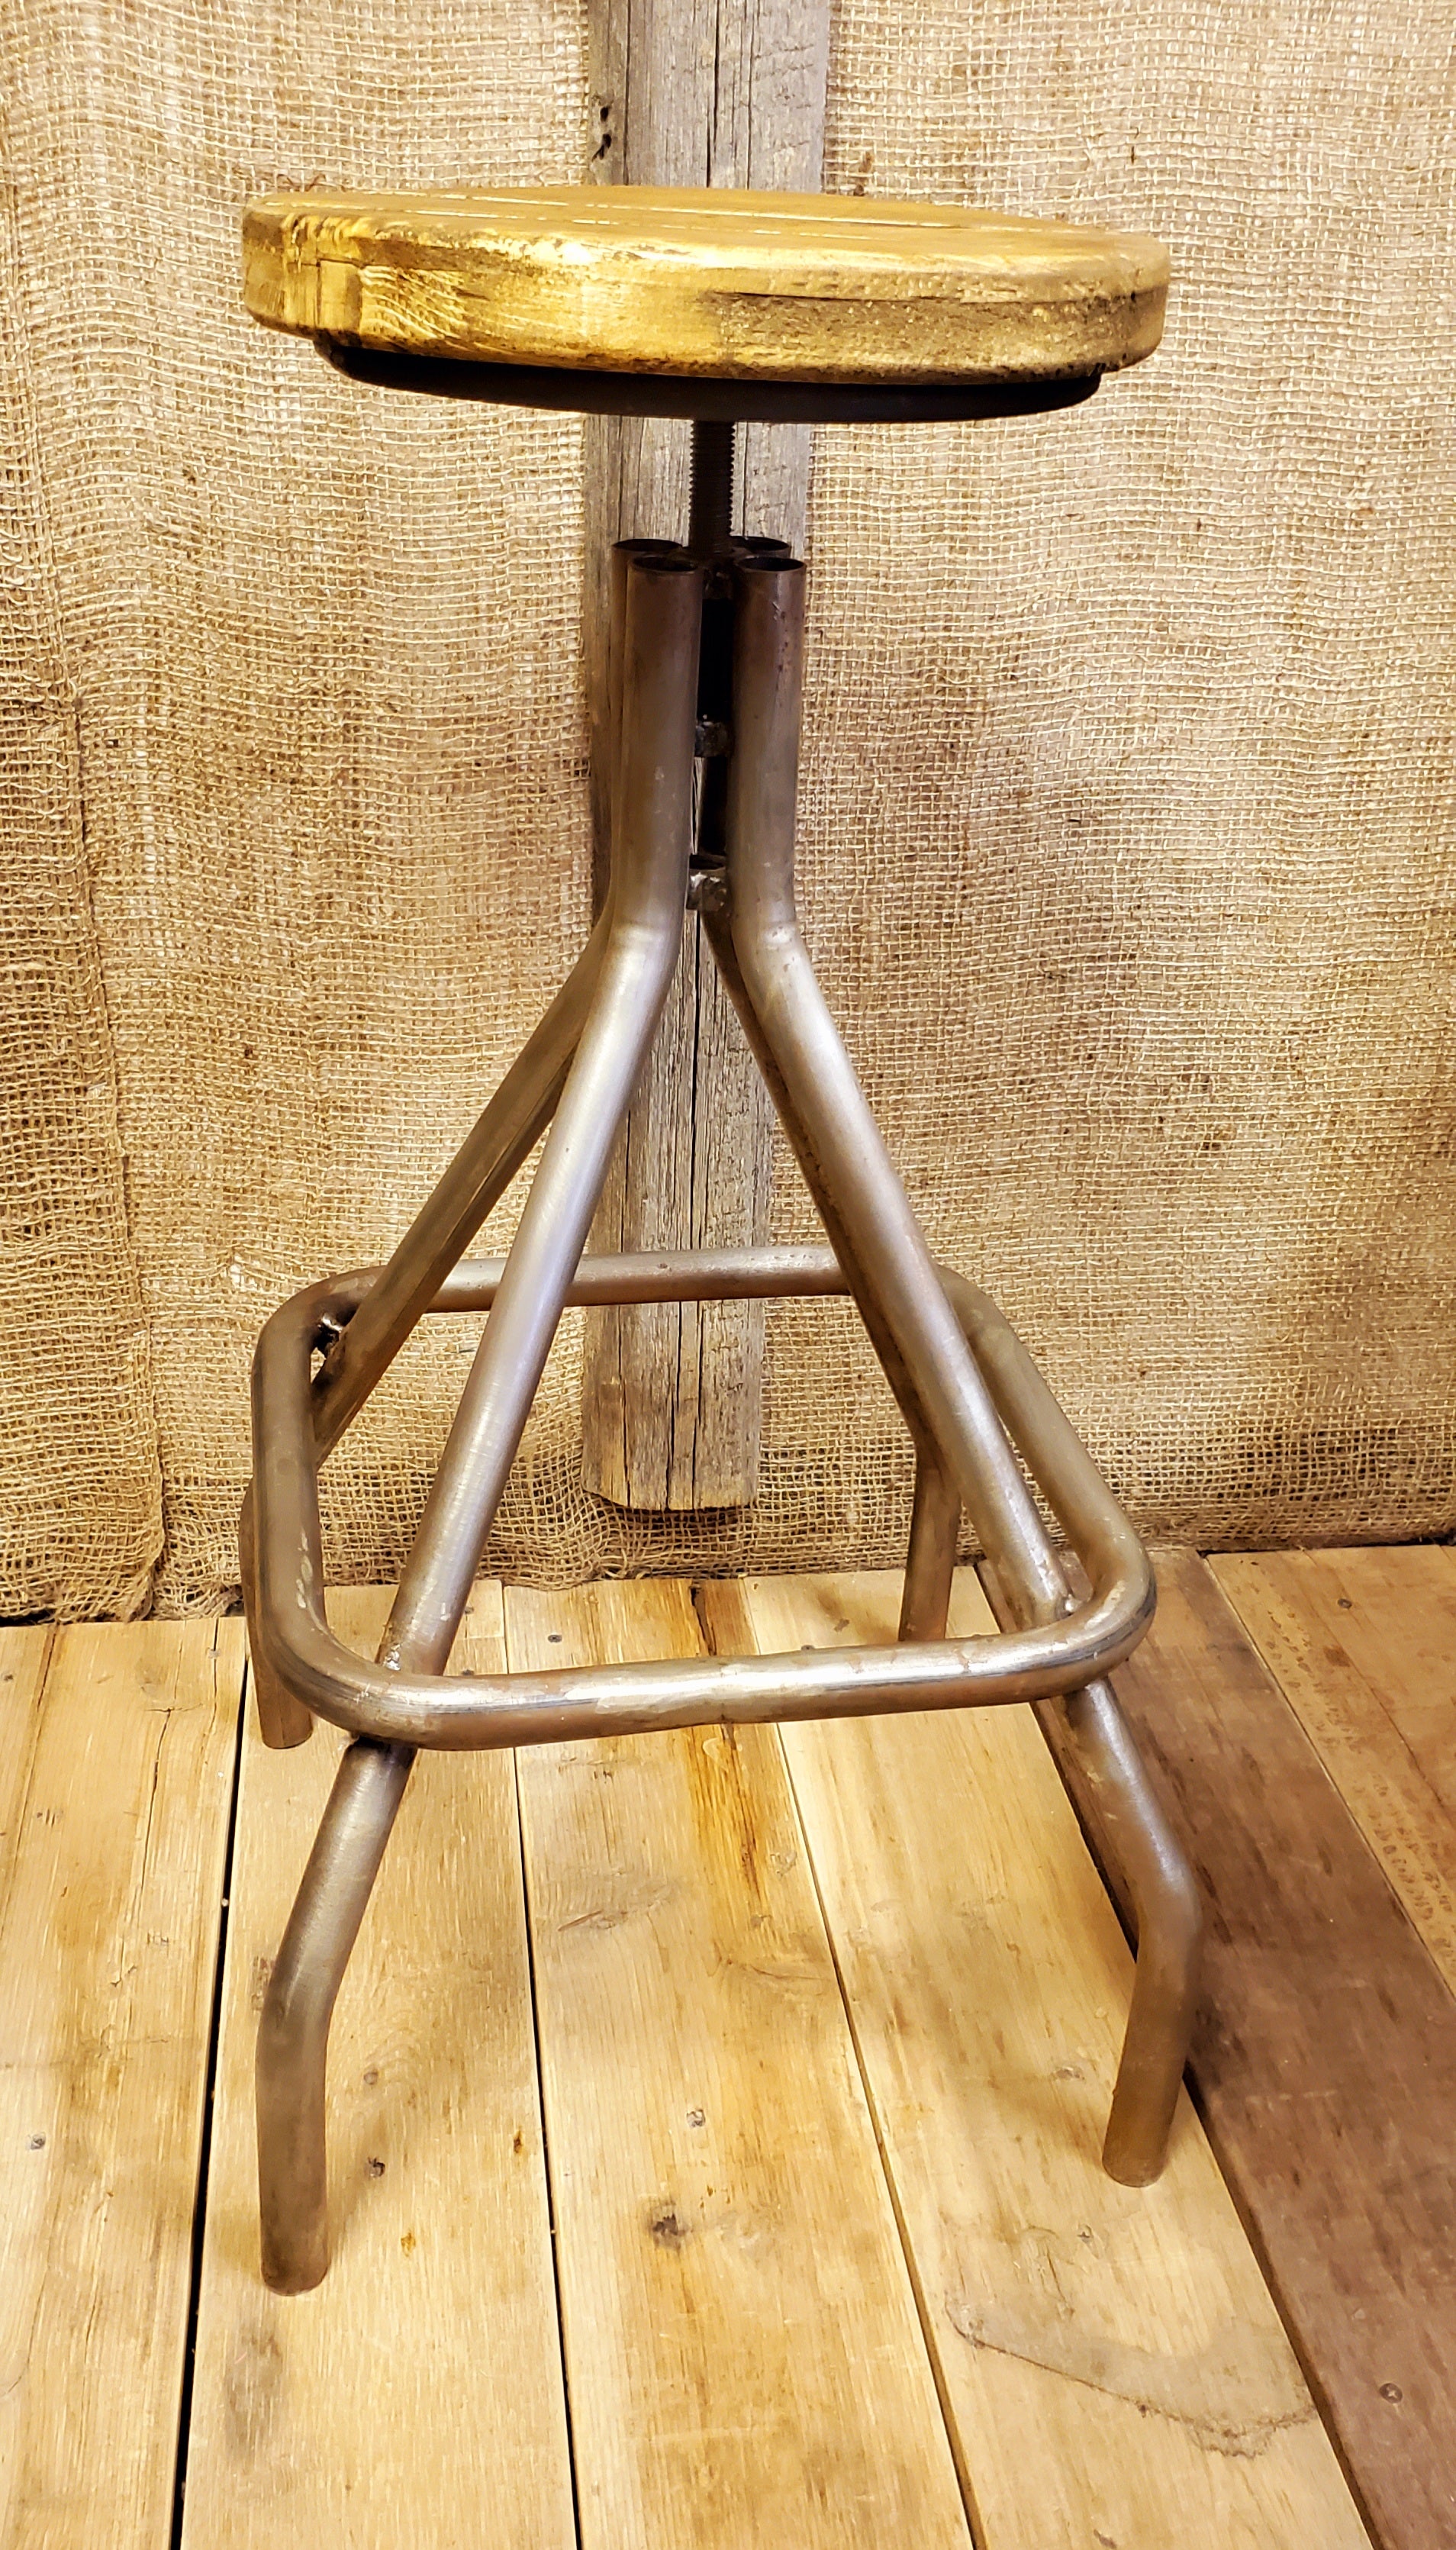 The 'Taylor' Square Base Tubular Adjustable Height Stool - Spearhead Collection - Stools - Bar stool, industrial stool, stools, swivel stool, vintage stool